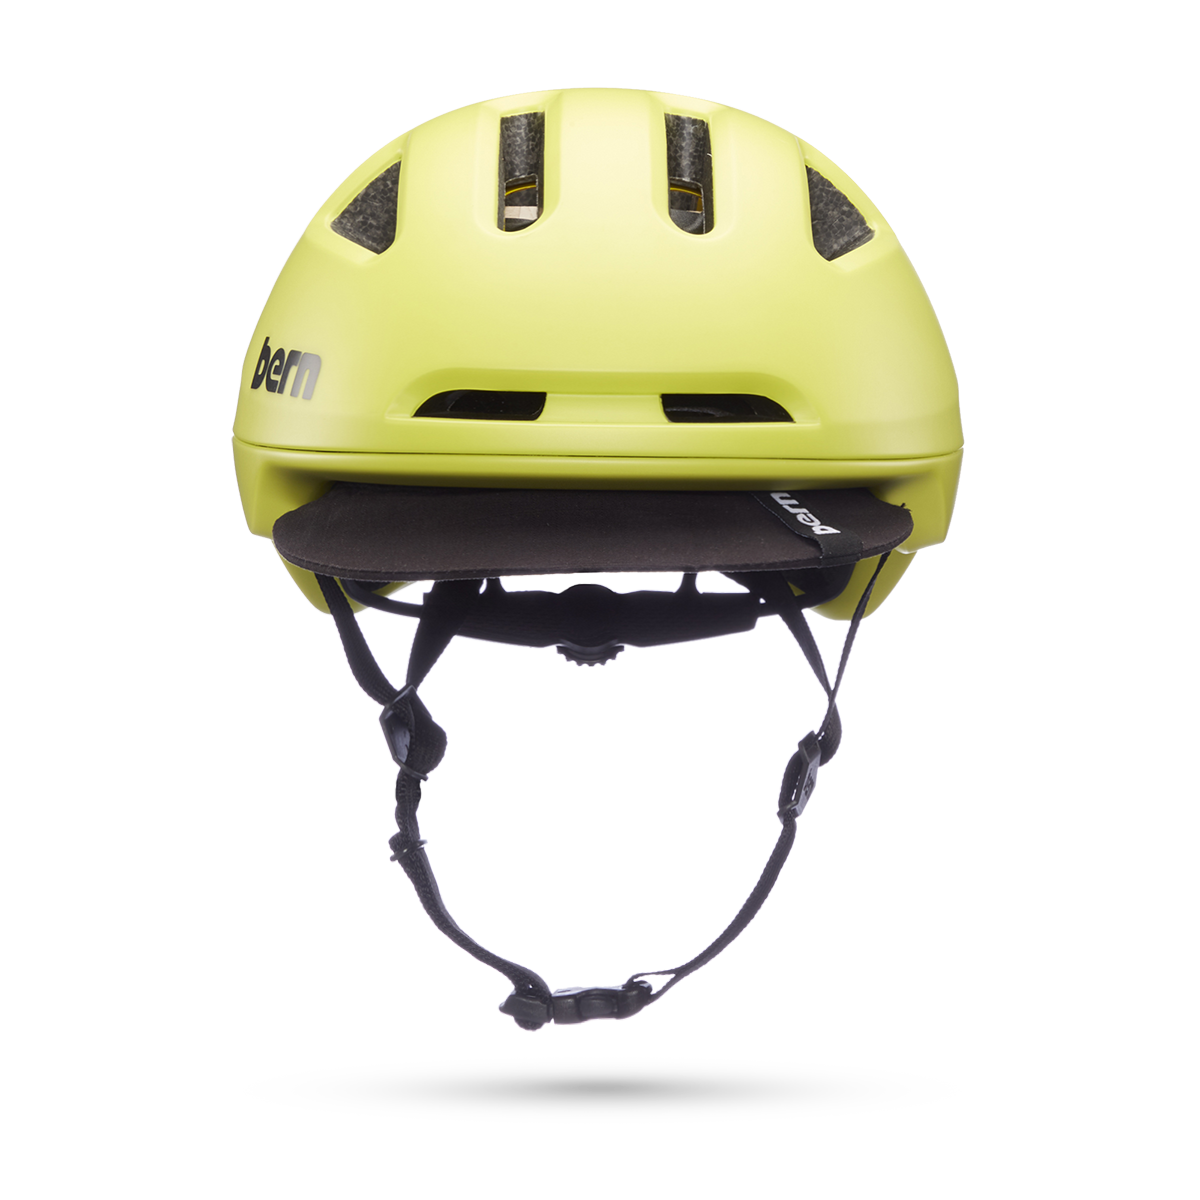 Major MIPS Bike Helmet (Barn Deal)